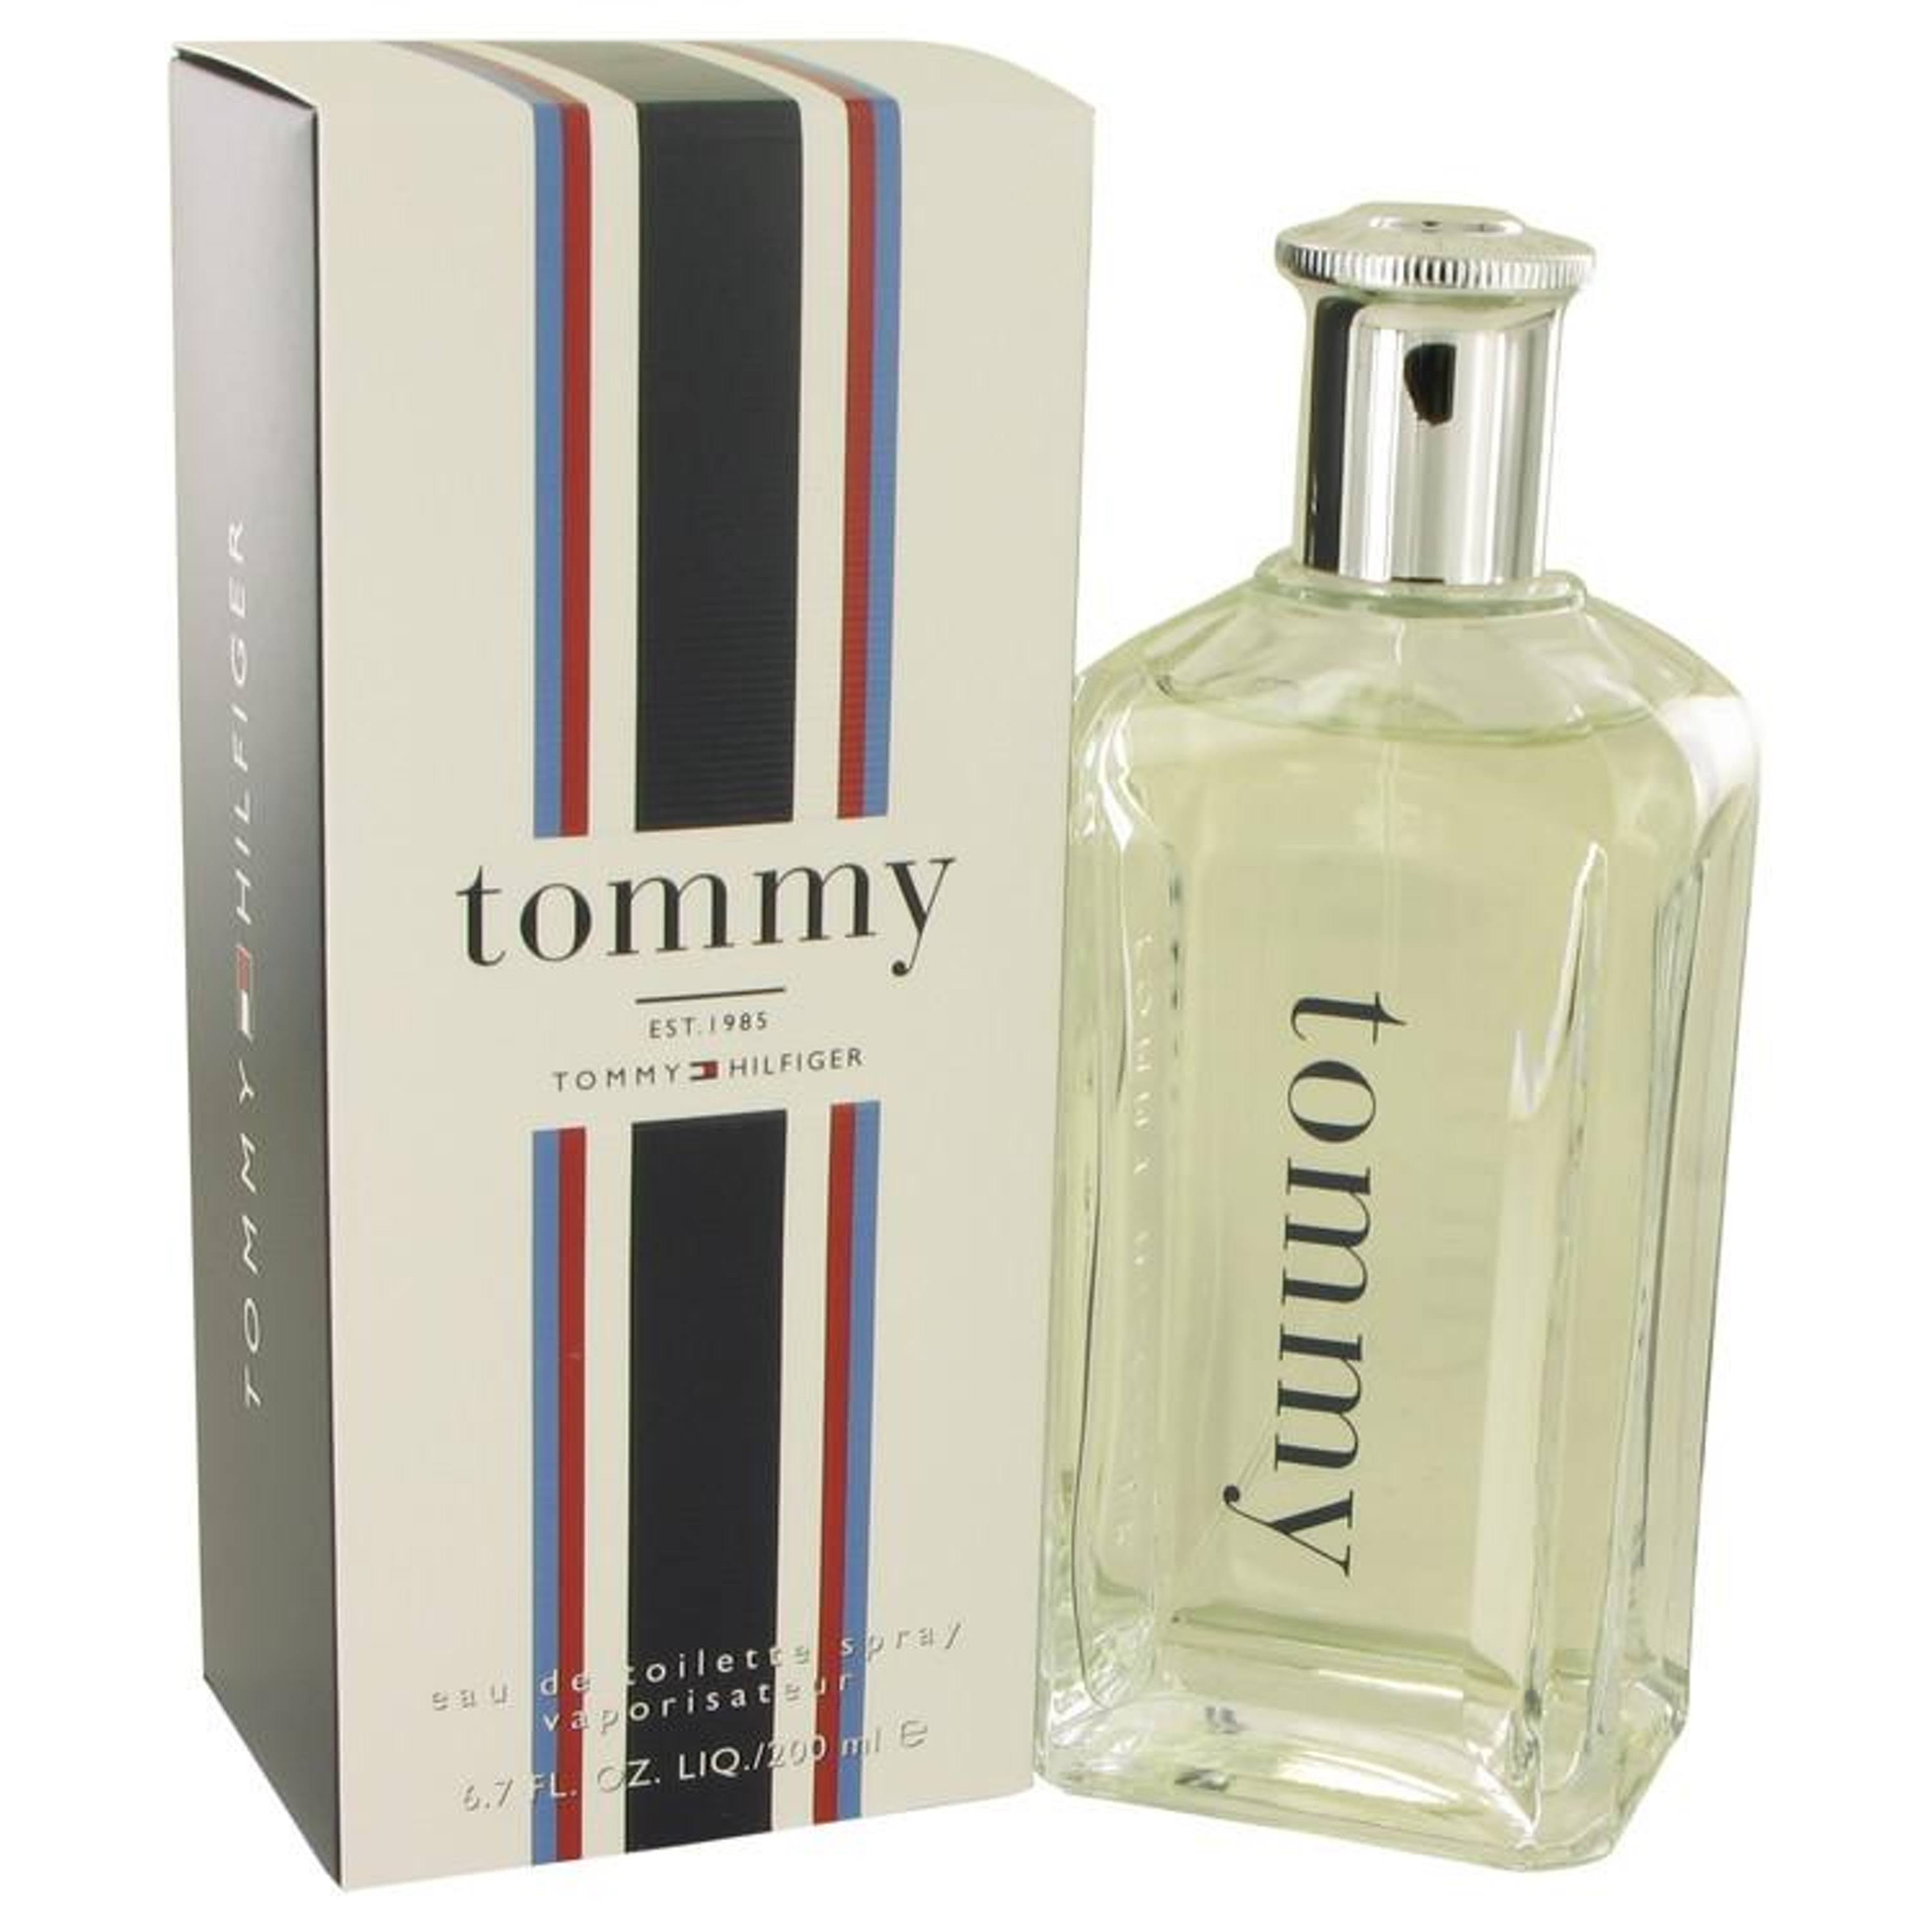 Tommy Hilfiger by Tommy Hilfiger 6.7 oz Eau de Toilette Spray for Men